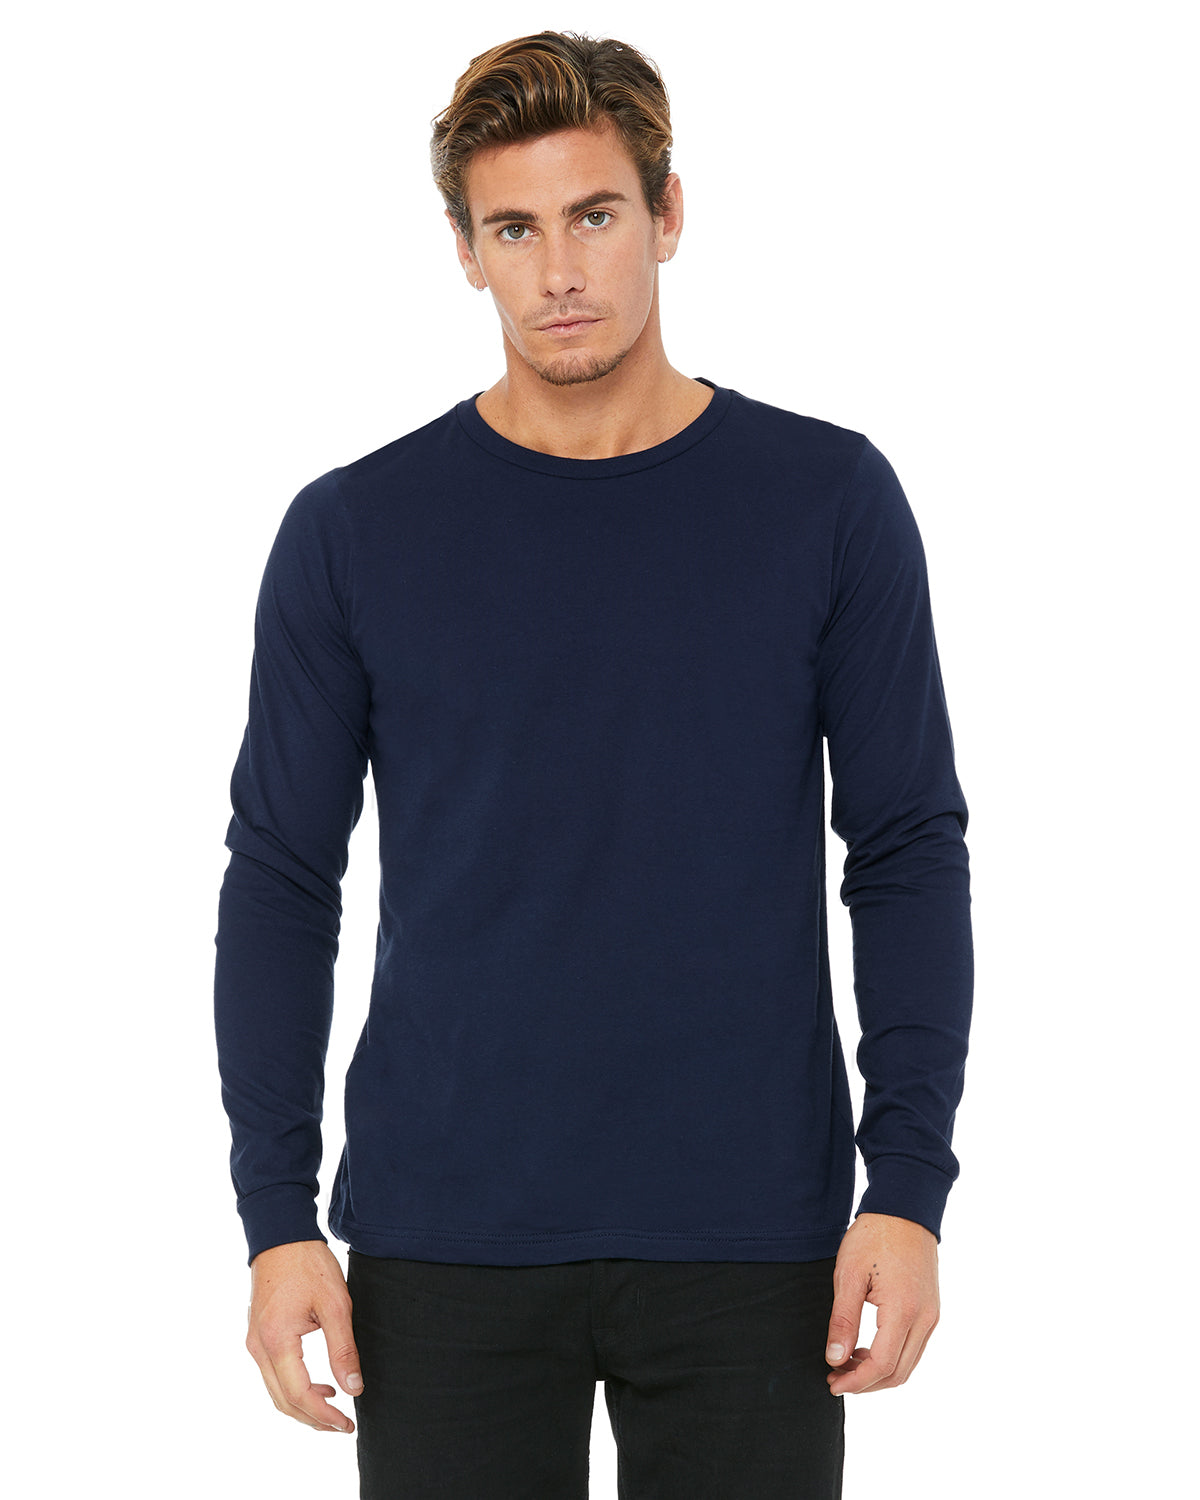 Unisex Premium Long Sleeve T-Shirt 3501